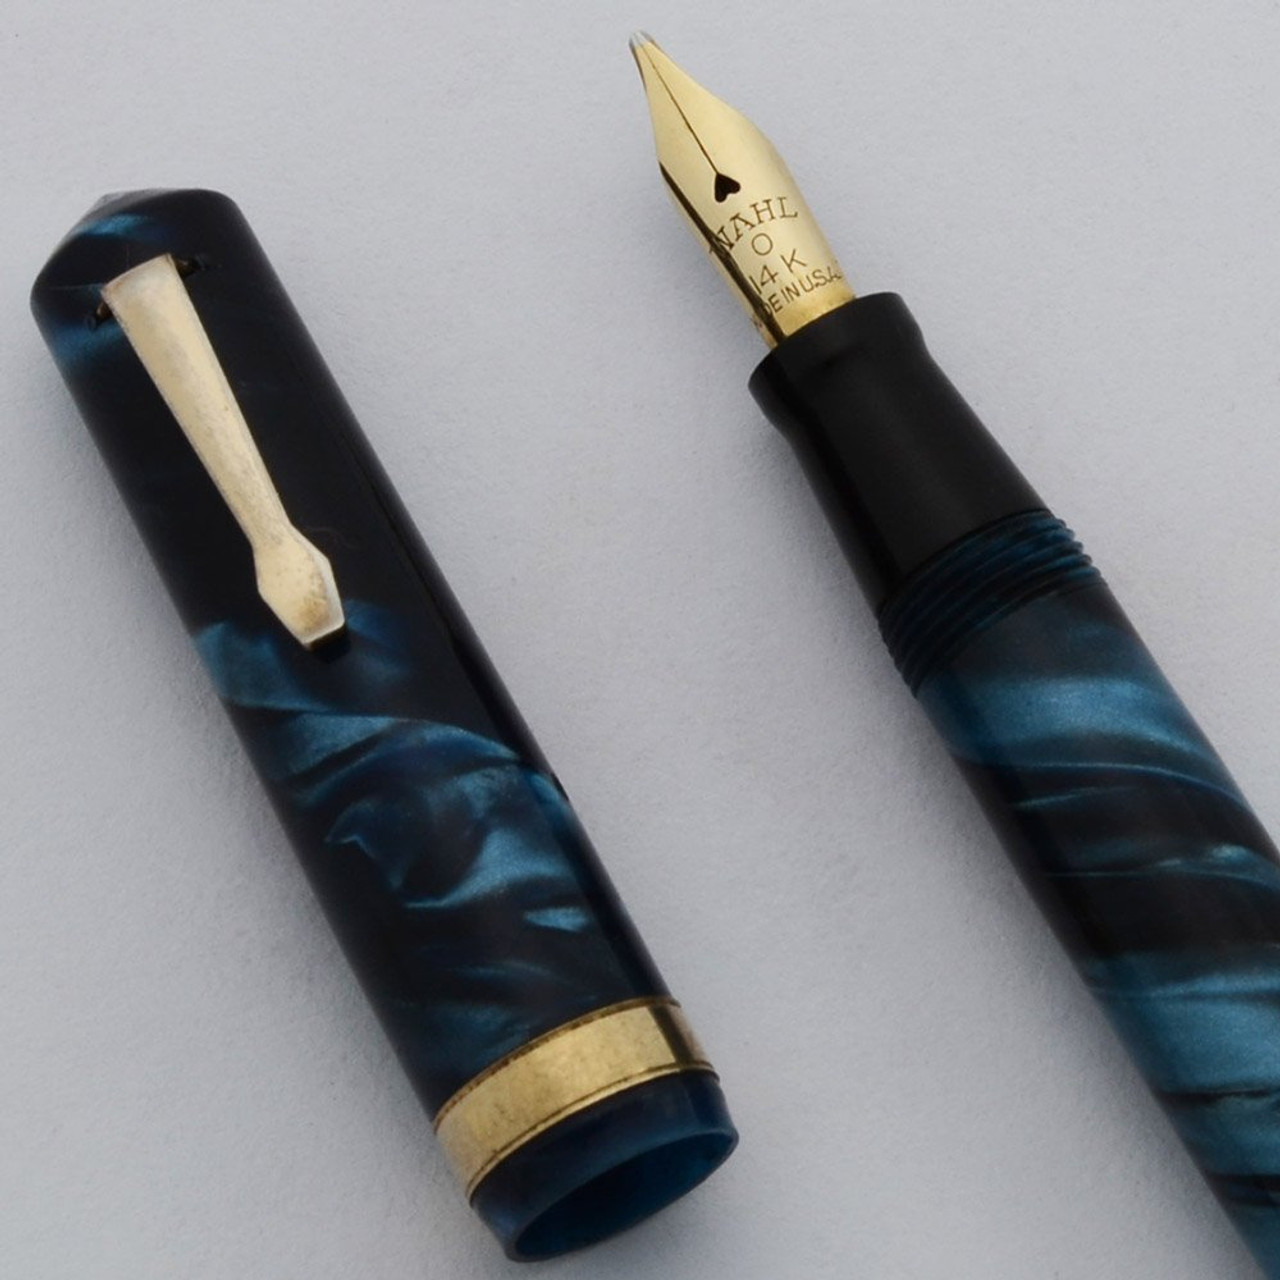 Wahl Eversharp Bantam Fountain Pen - Blue Swirled, Bulb Filler, #0 14k Nib (Superior, Restored)